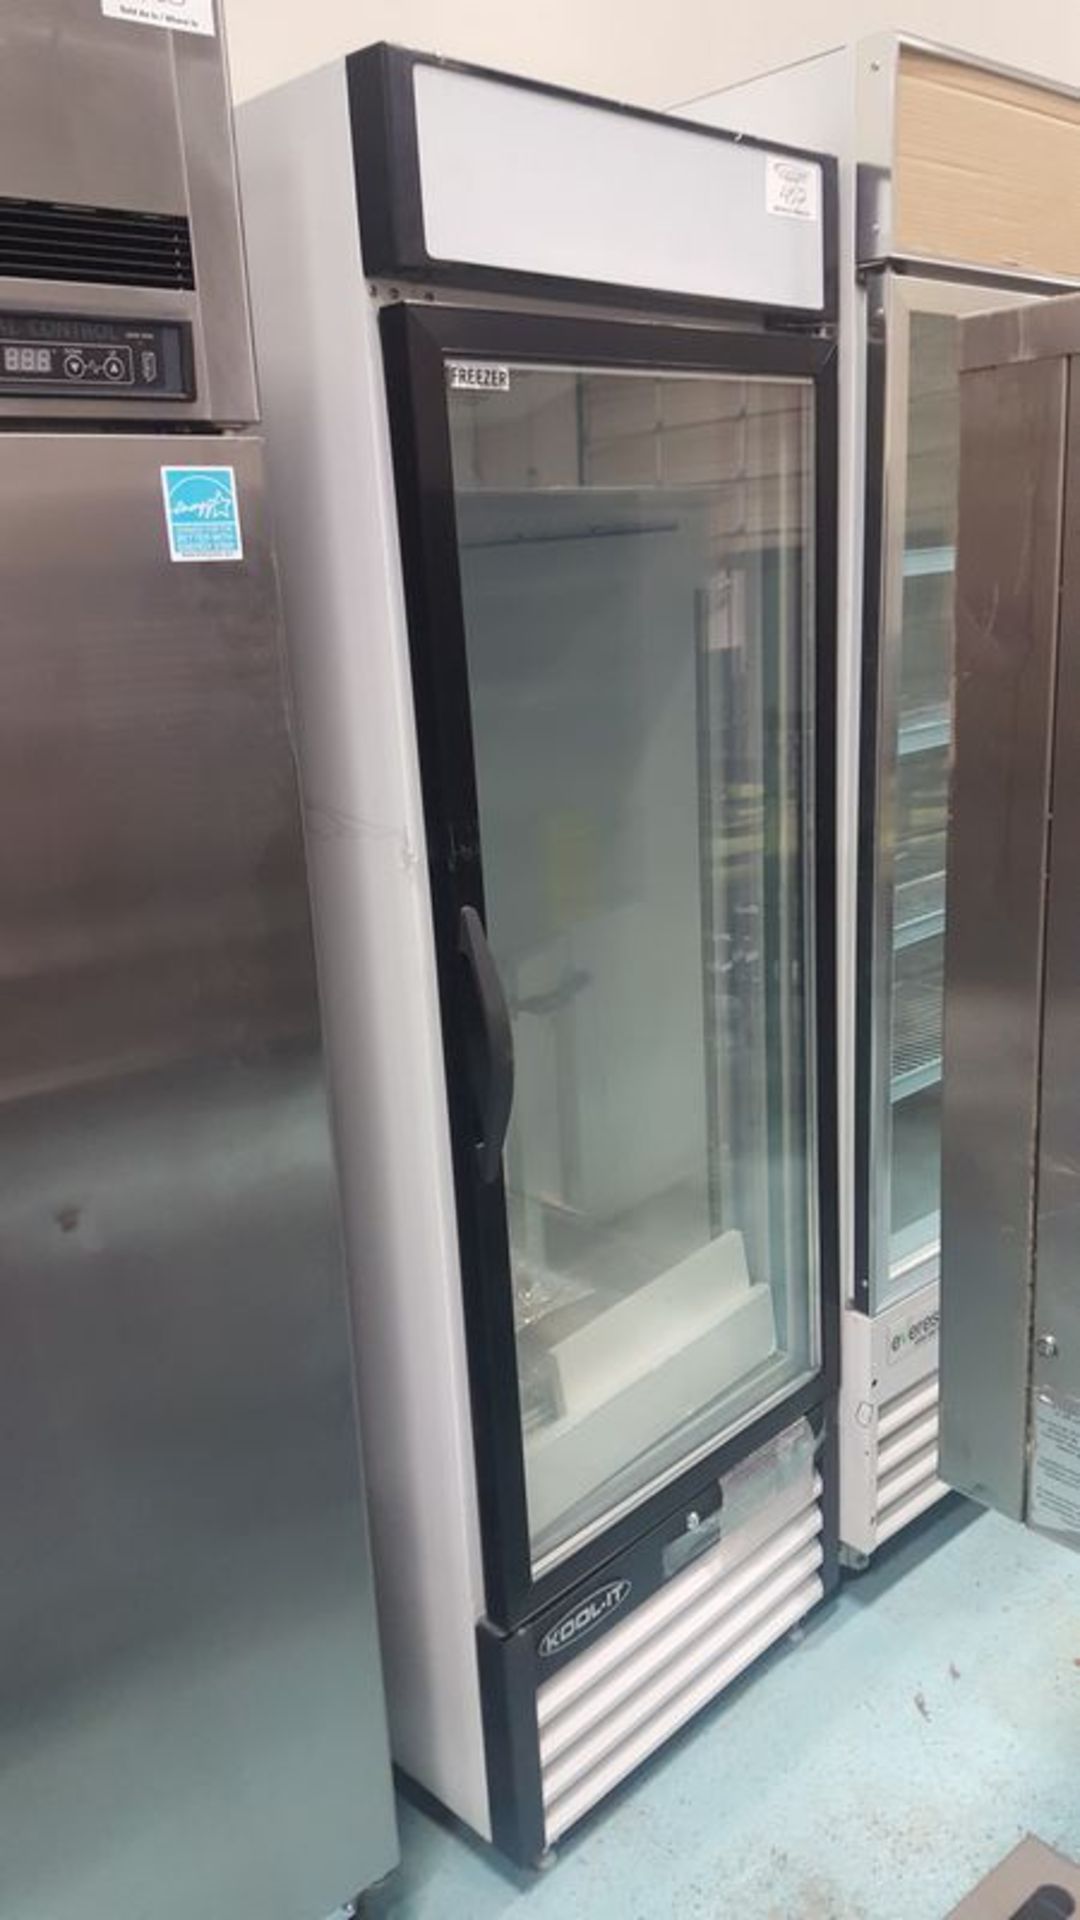 Kool-it single door display Freezer - appears unused - small crack in lower kick panel